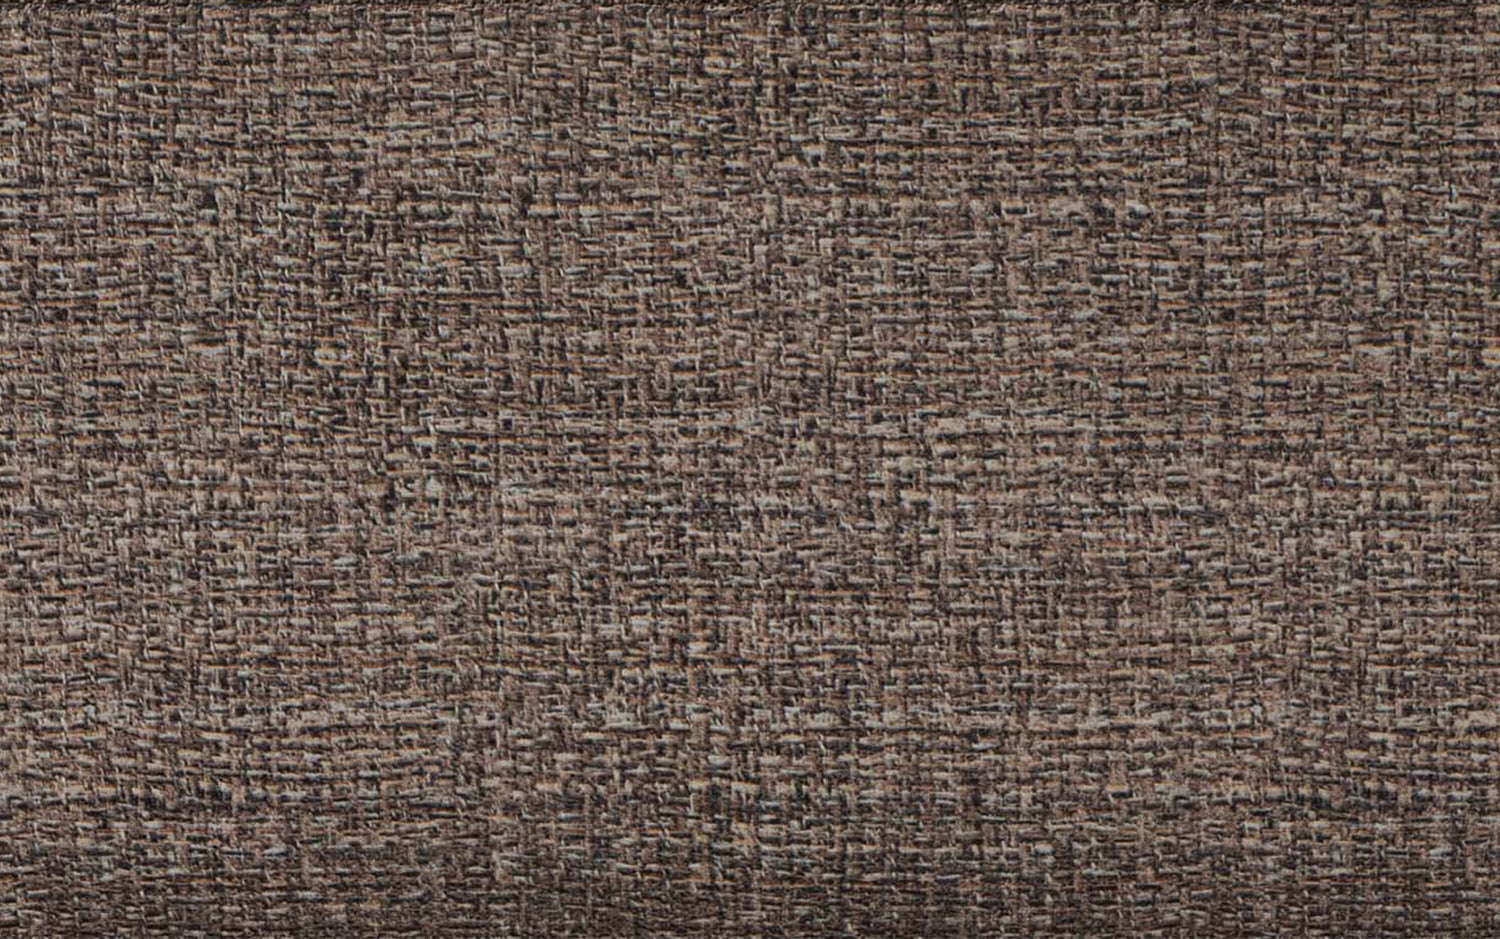 Mink Brown Tweed Style Fabric | Harrison Coffee Table Storage Ottoman